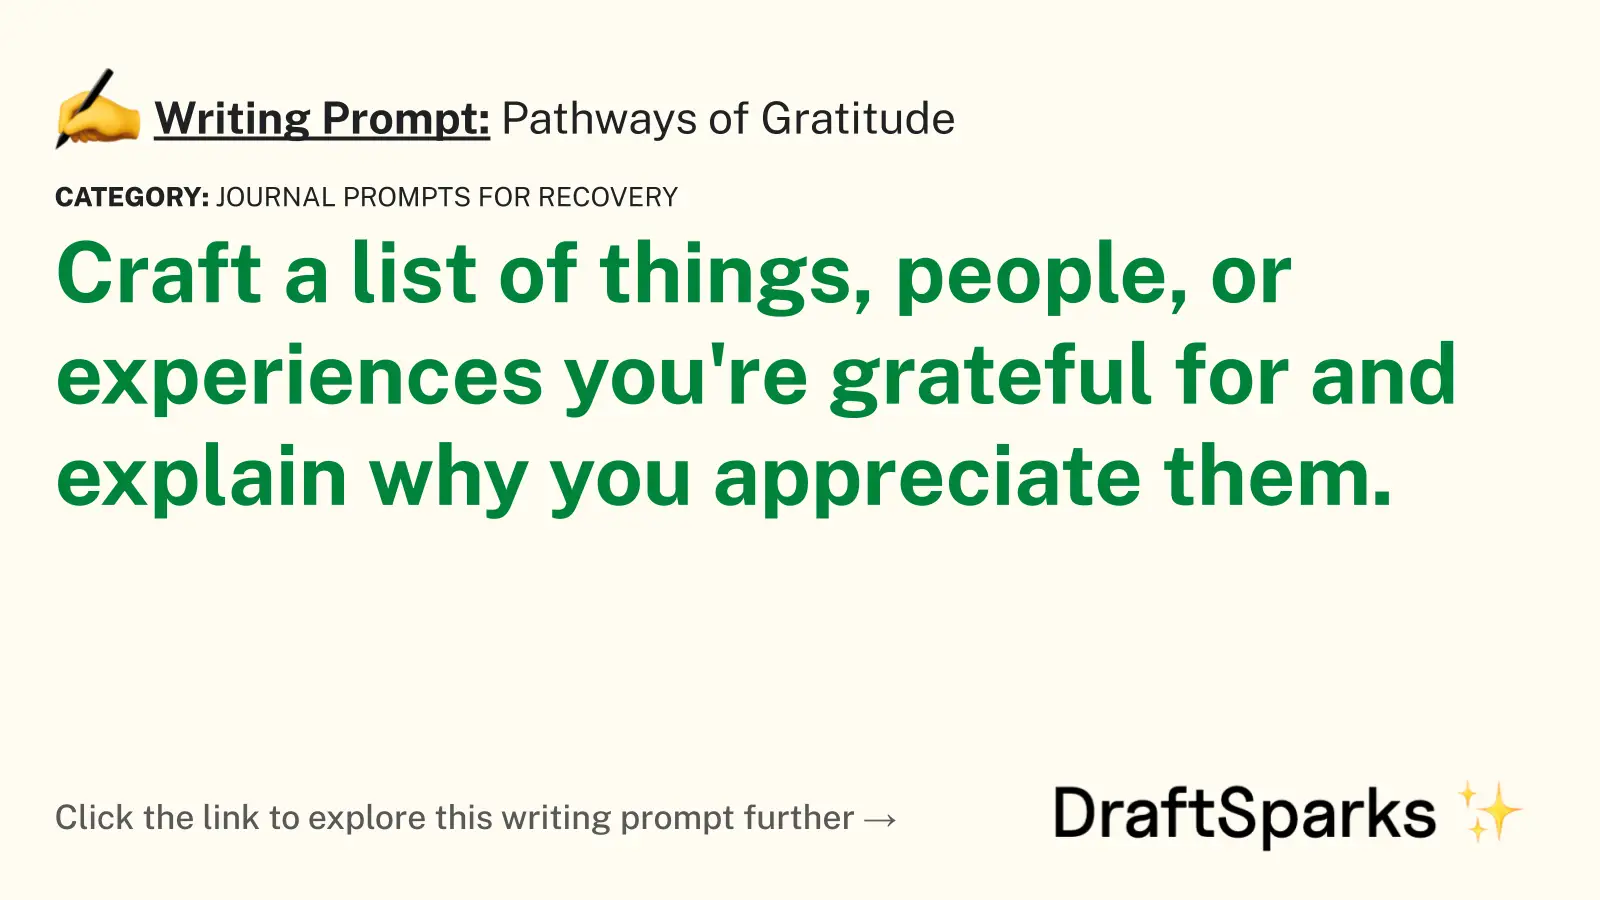 Pathways of Gratitude